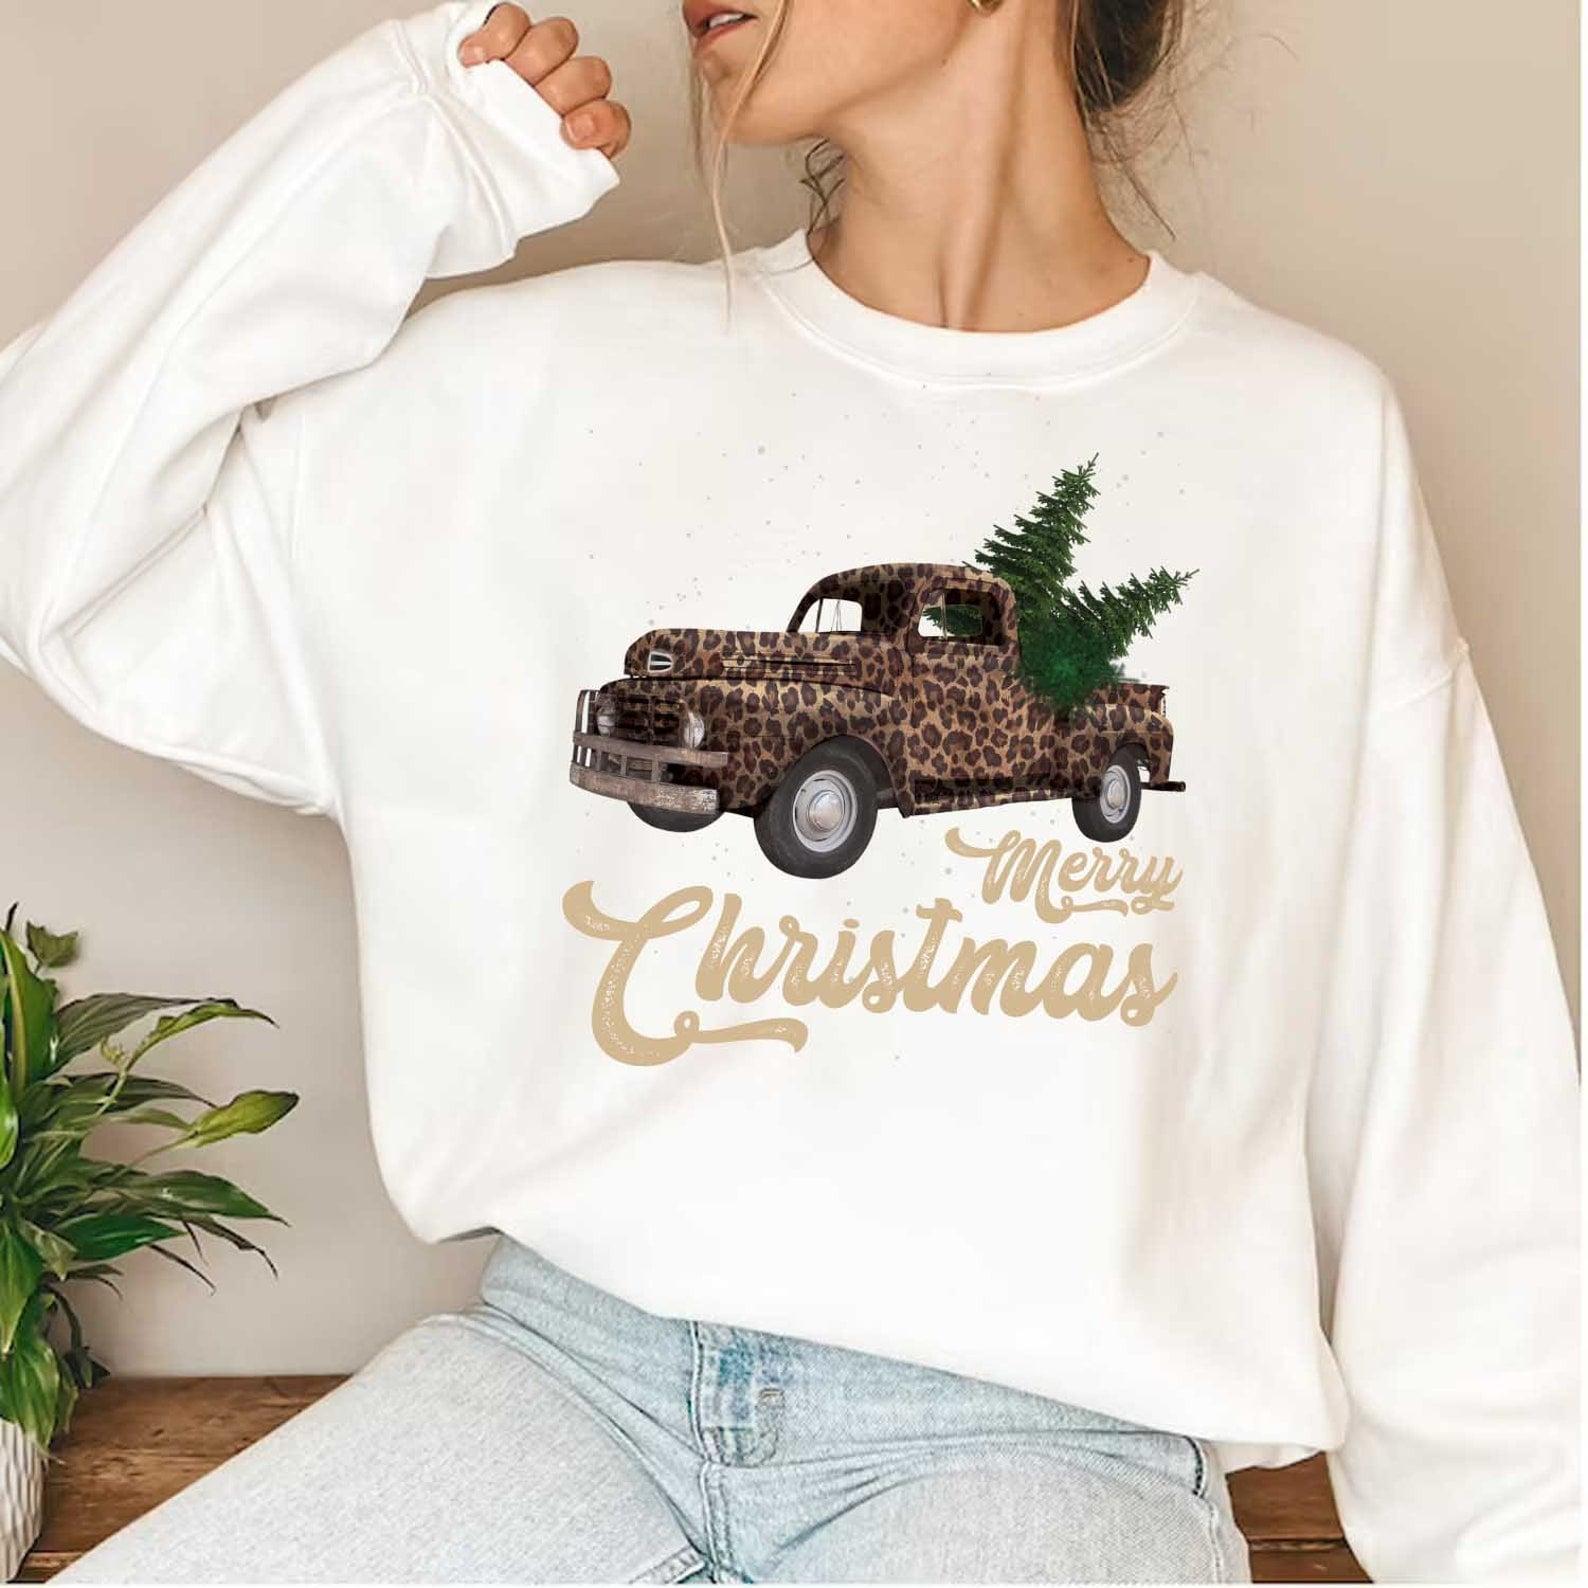 CTEEGC Merry Christmas Hoodies for Women Cute Plaid Tree Sweatshirt Funny  Xmas Graphic Sweatshirts Long Sleeve Sweater Shirt Blue : :  Clothing, Shoes & Accessories